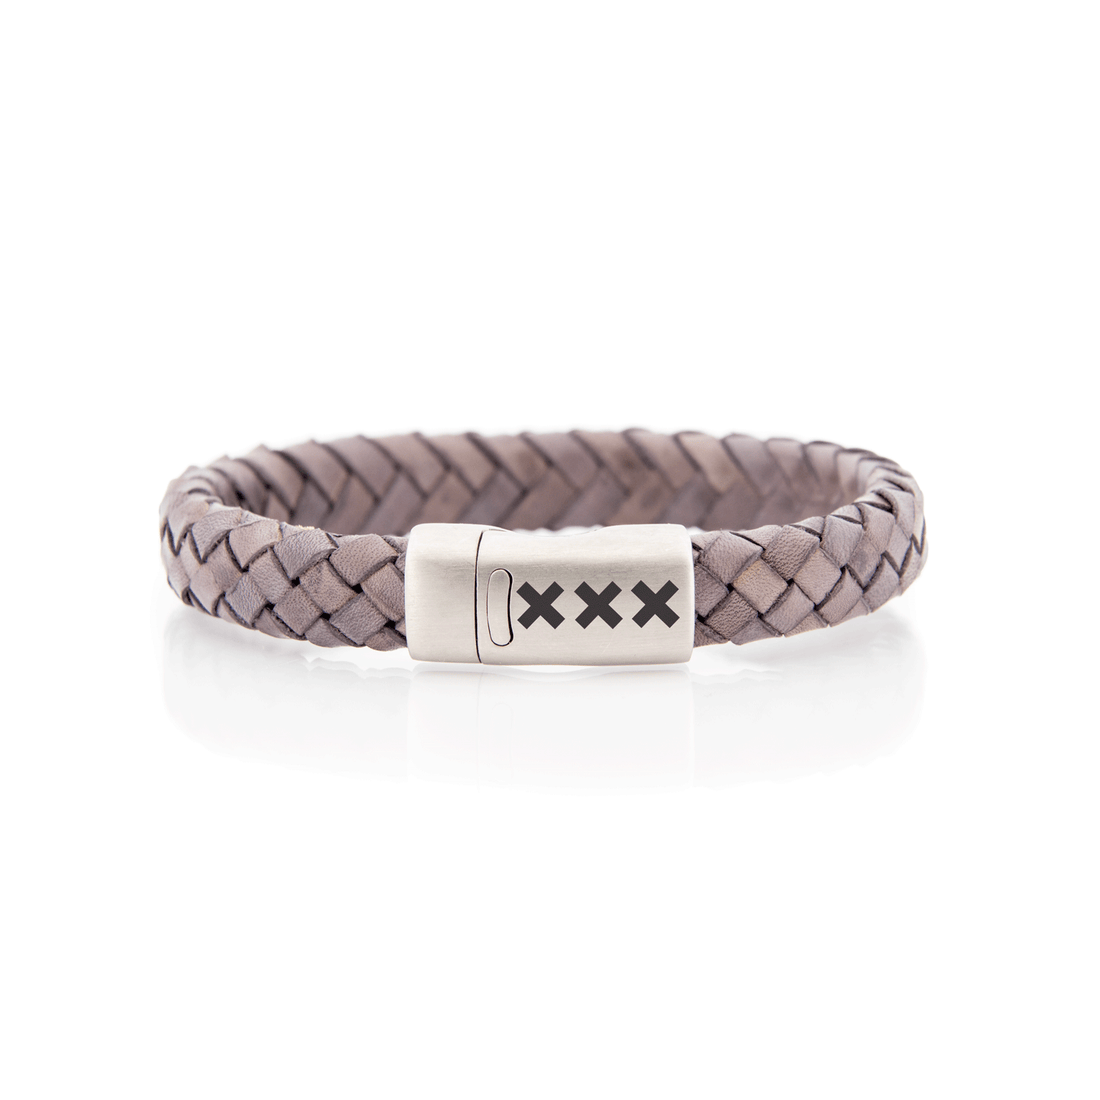 AMSTERDAM SIERAAD - Bracelet Leather Gray